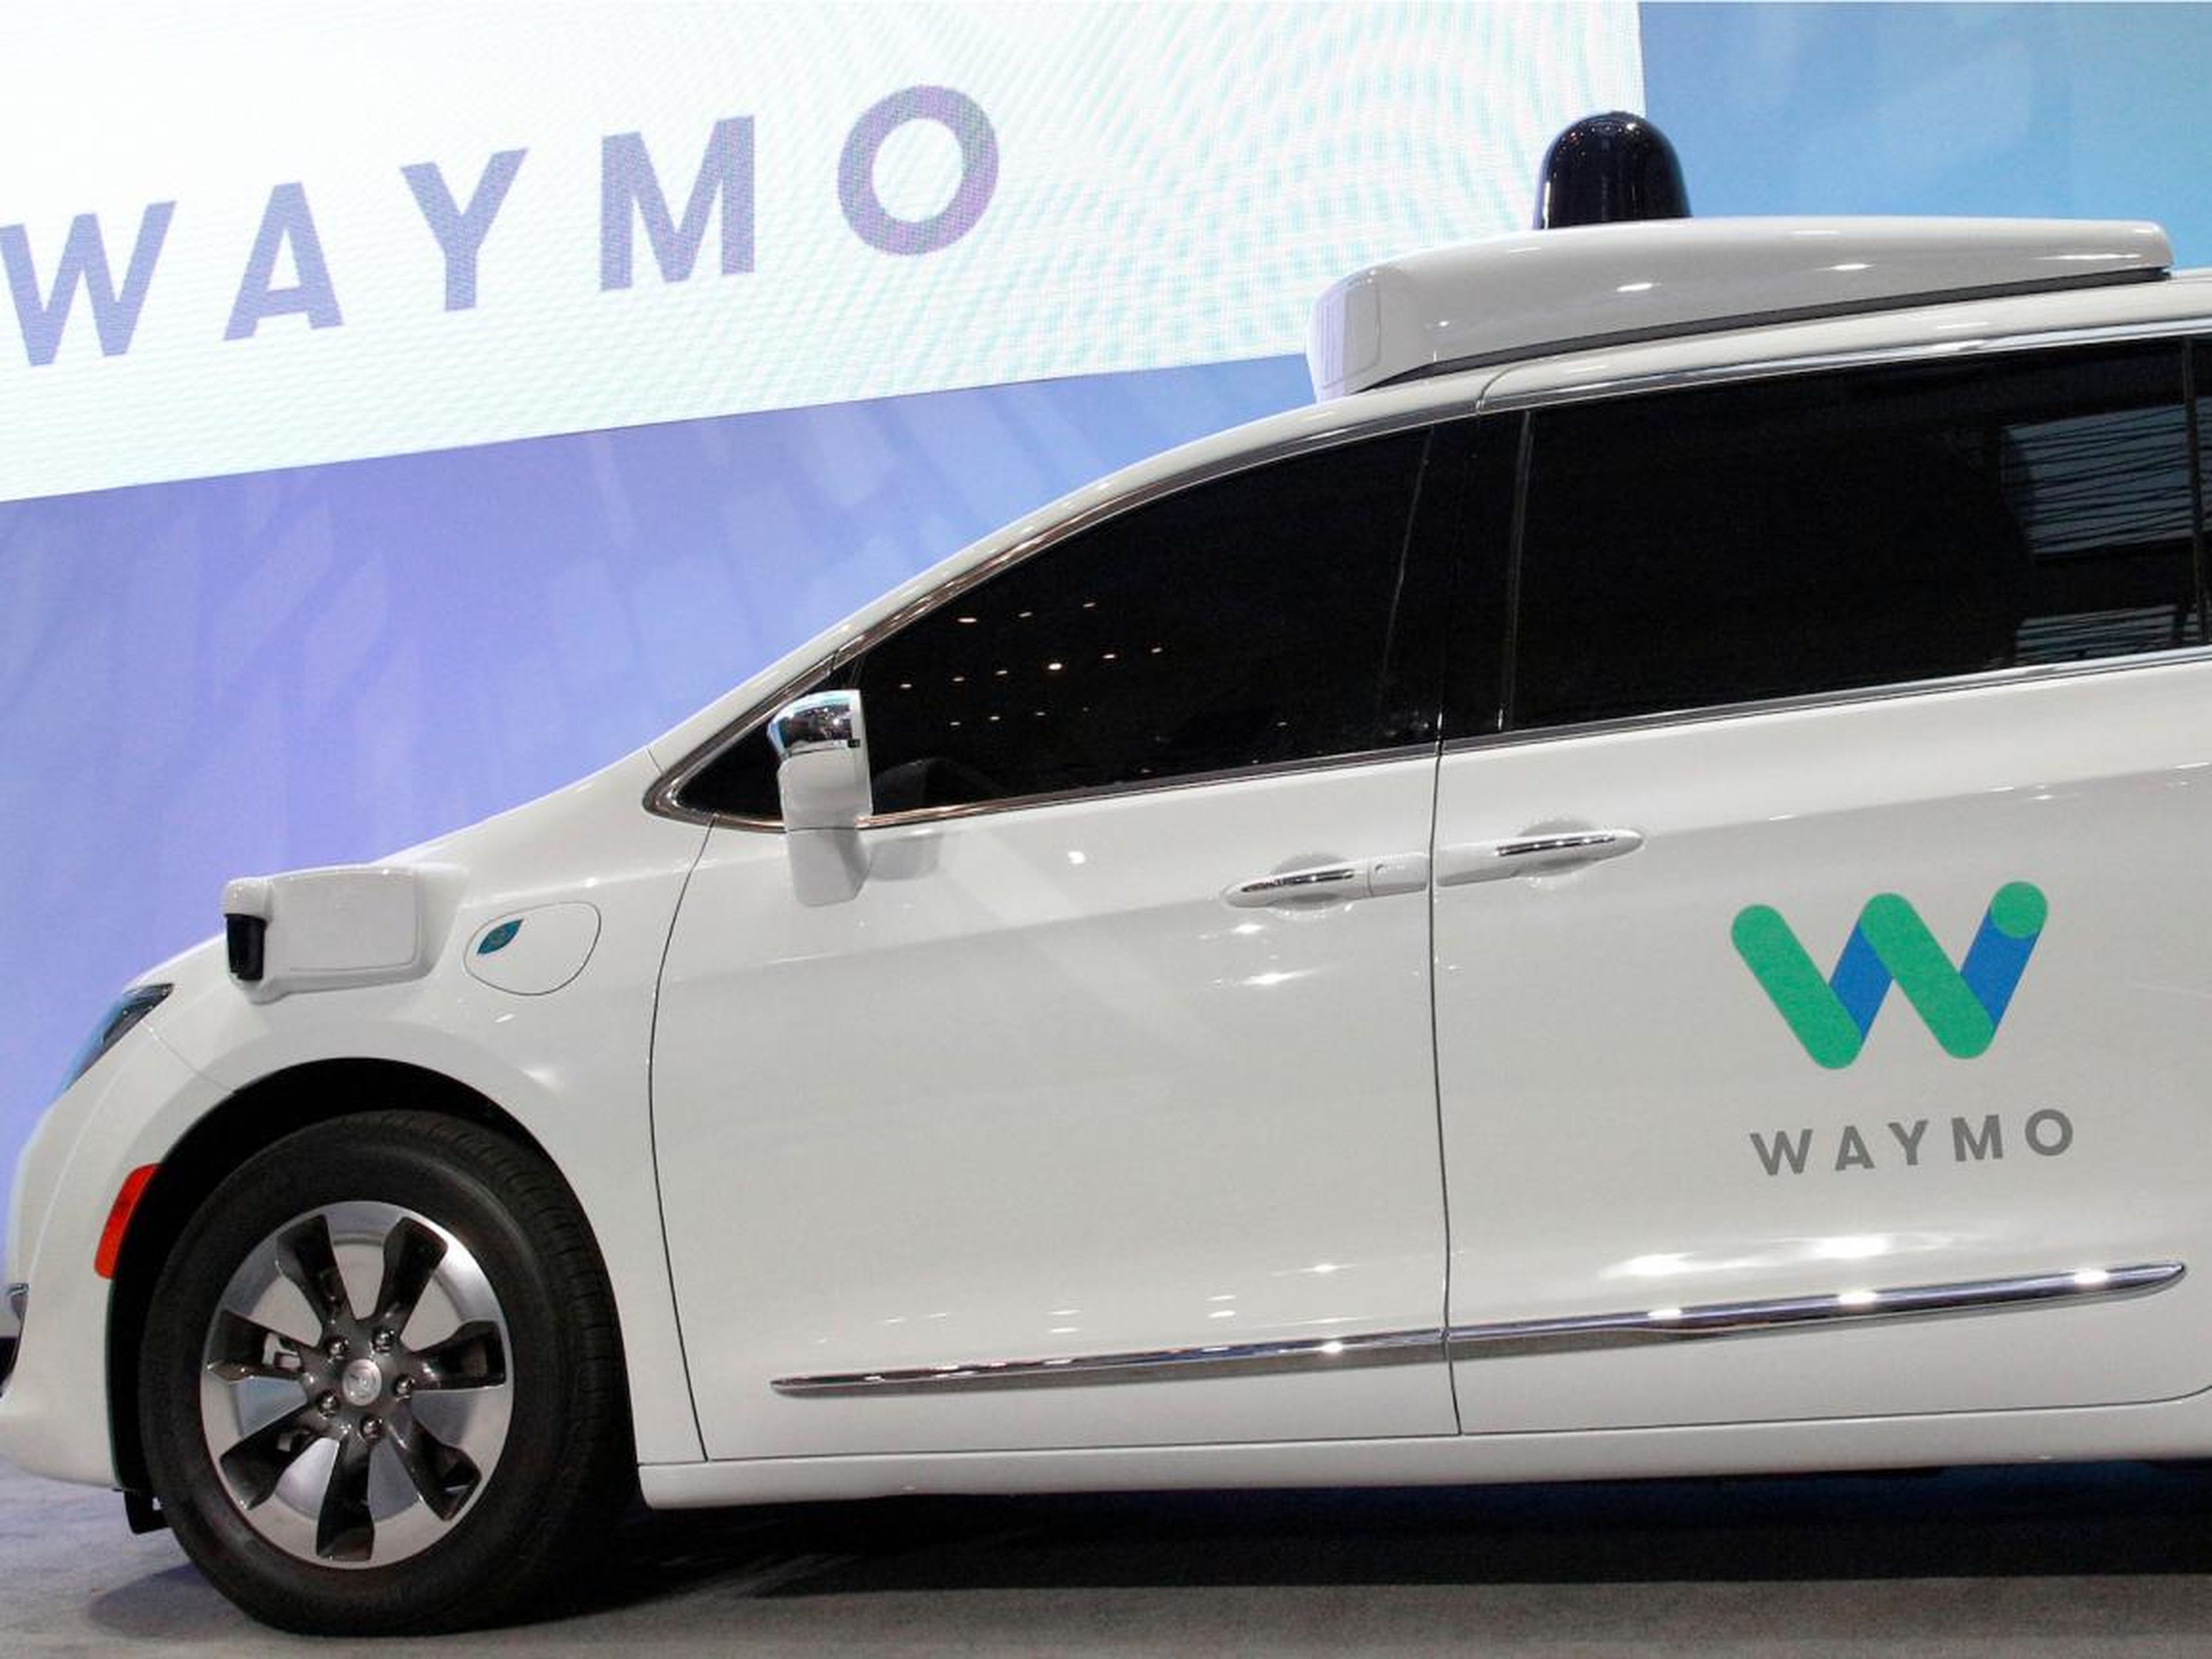 Google Car becomes Waymo.